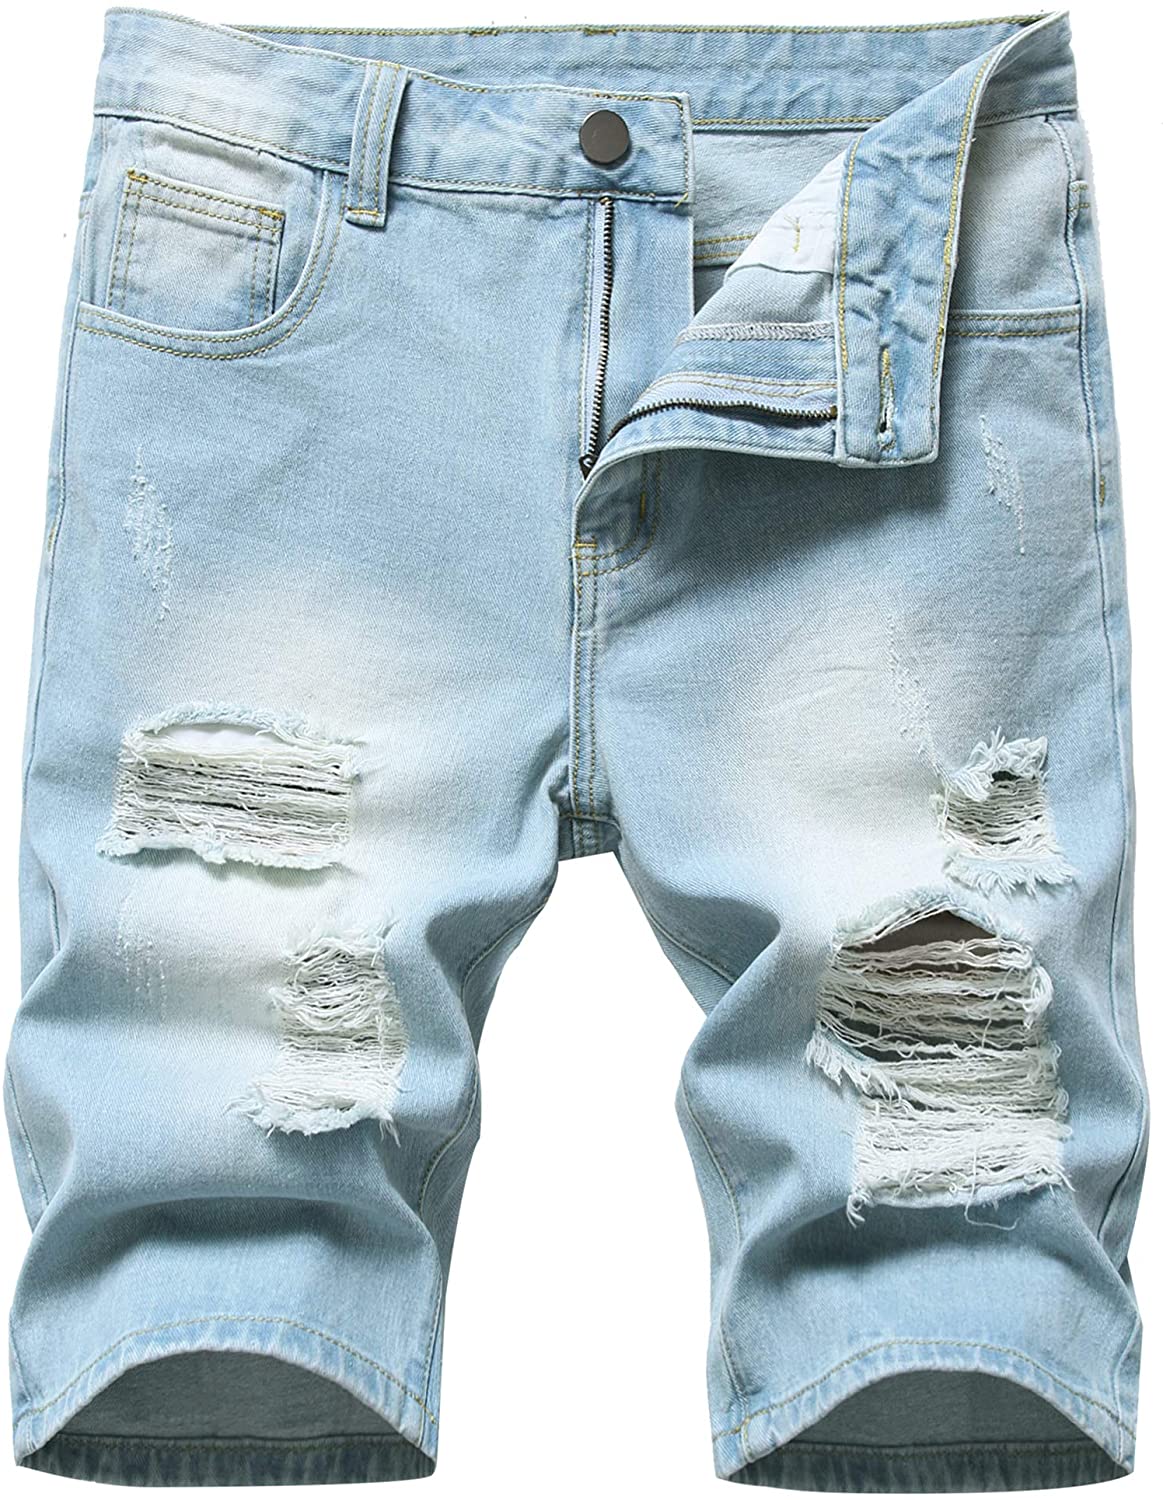 GUNLIRE Mens Summer Ripped Distressed Slim Fit Knee Length Washed Denim Jeans Shorts 